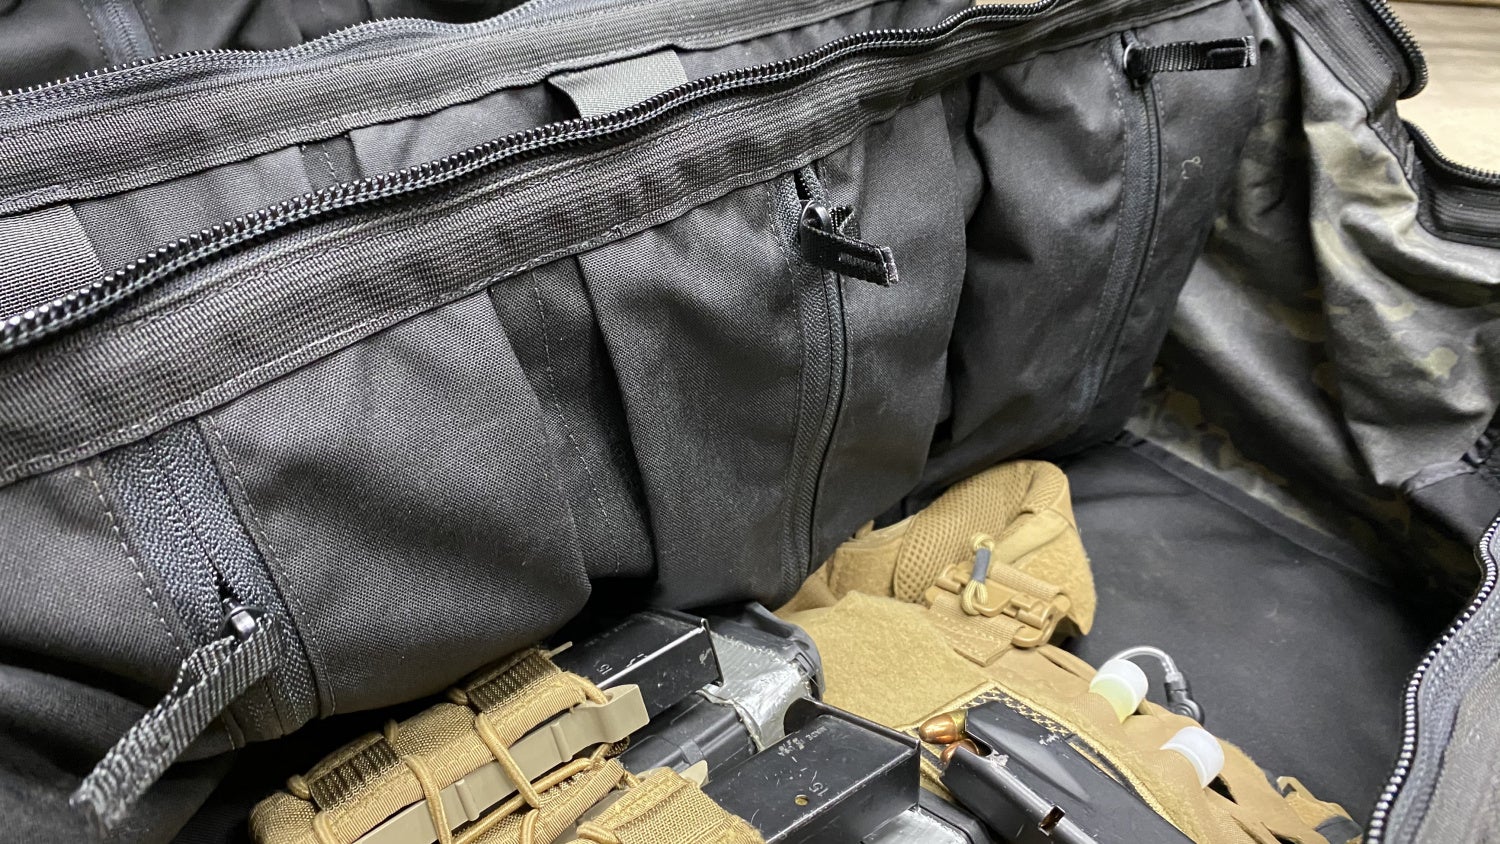 Why you Should Have a Good Range Bag